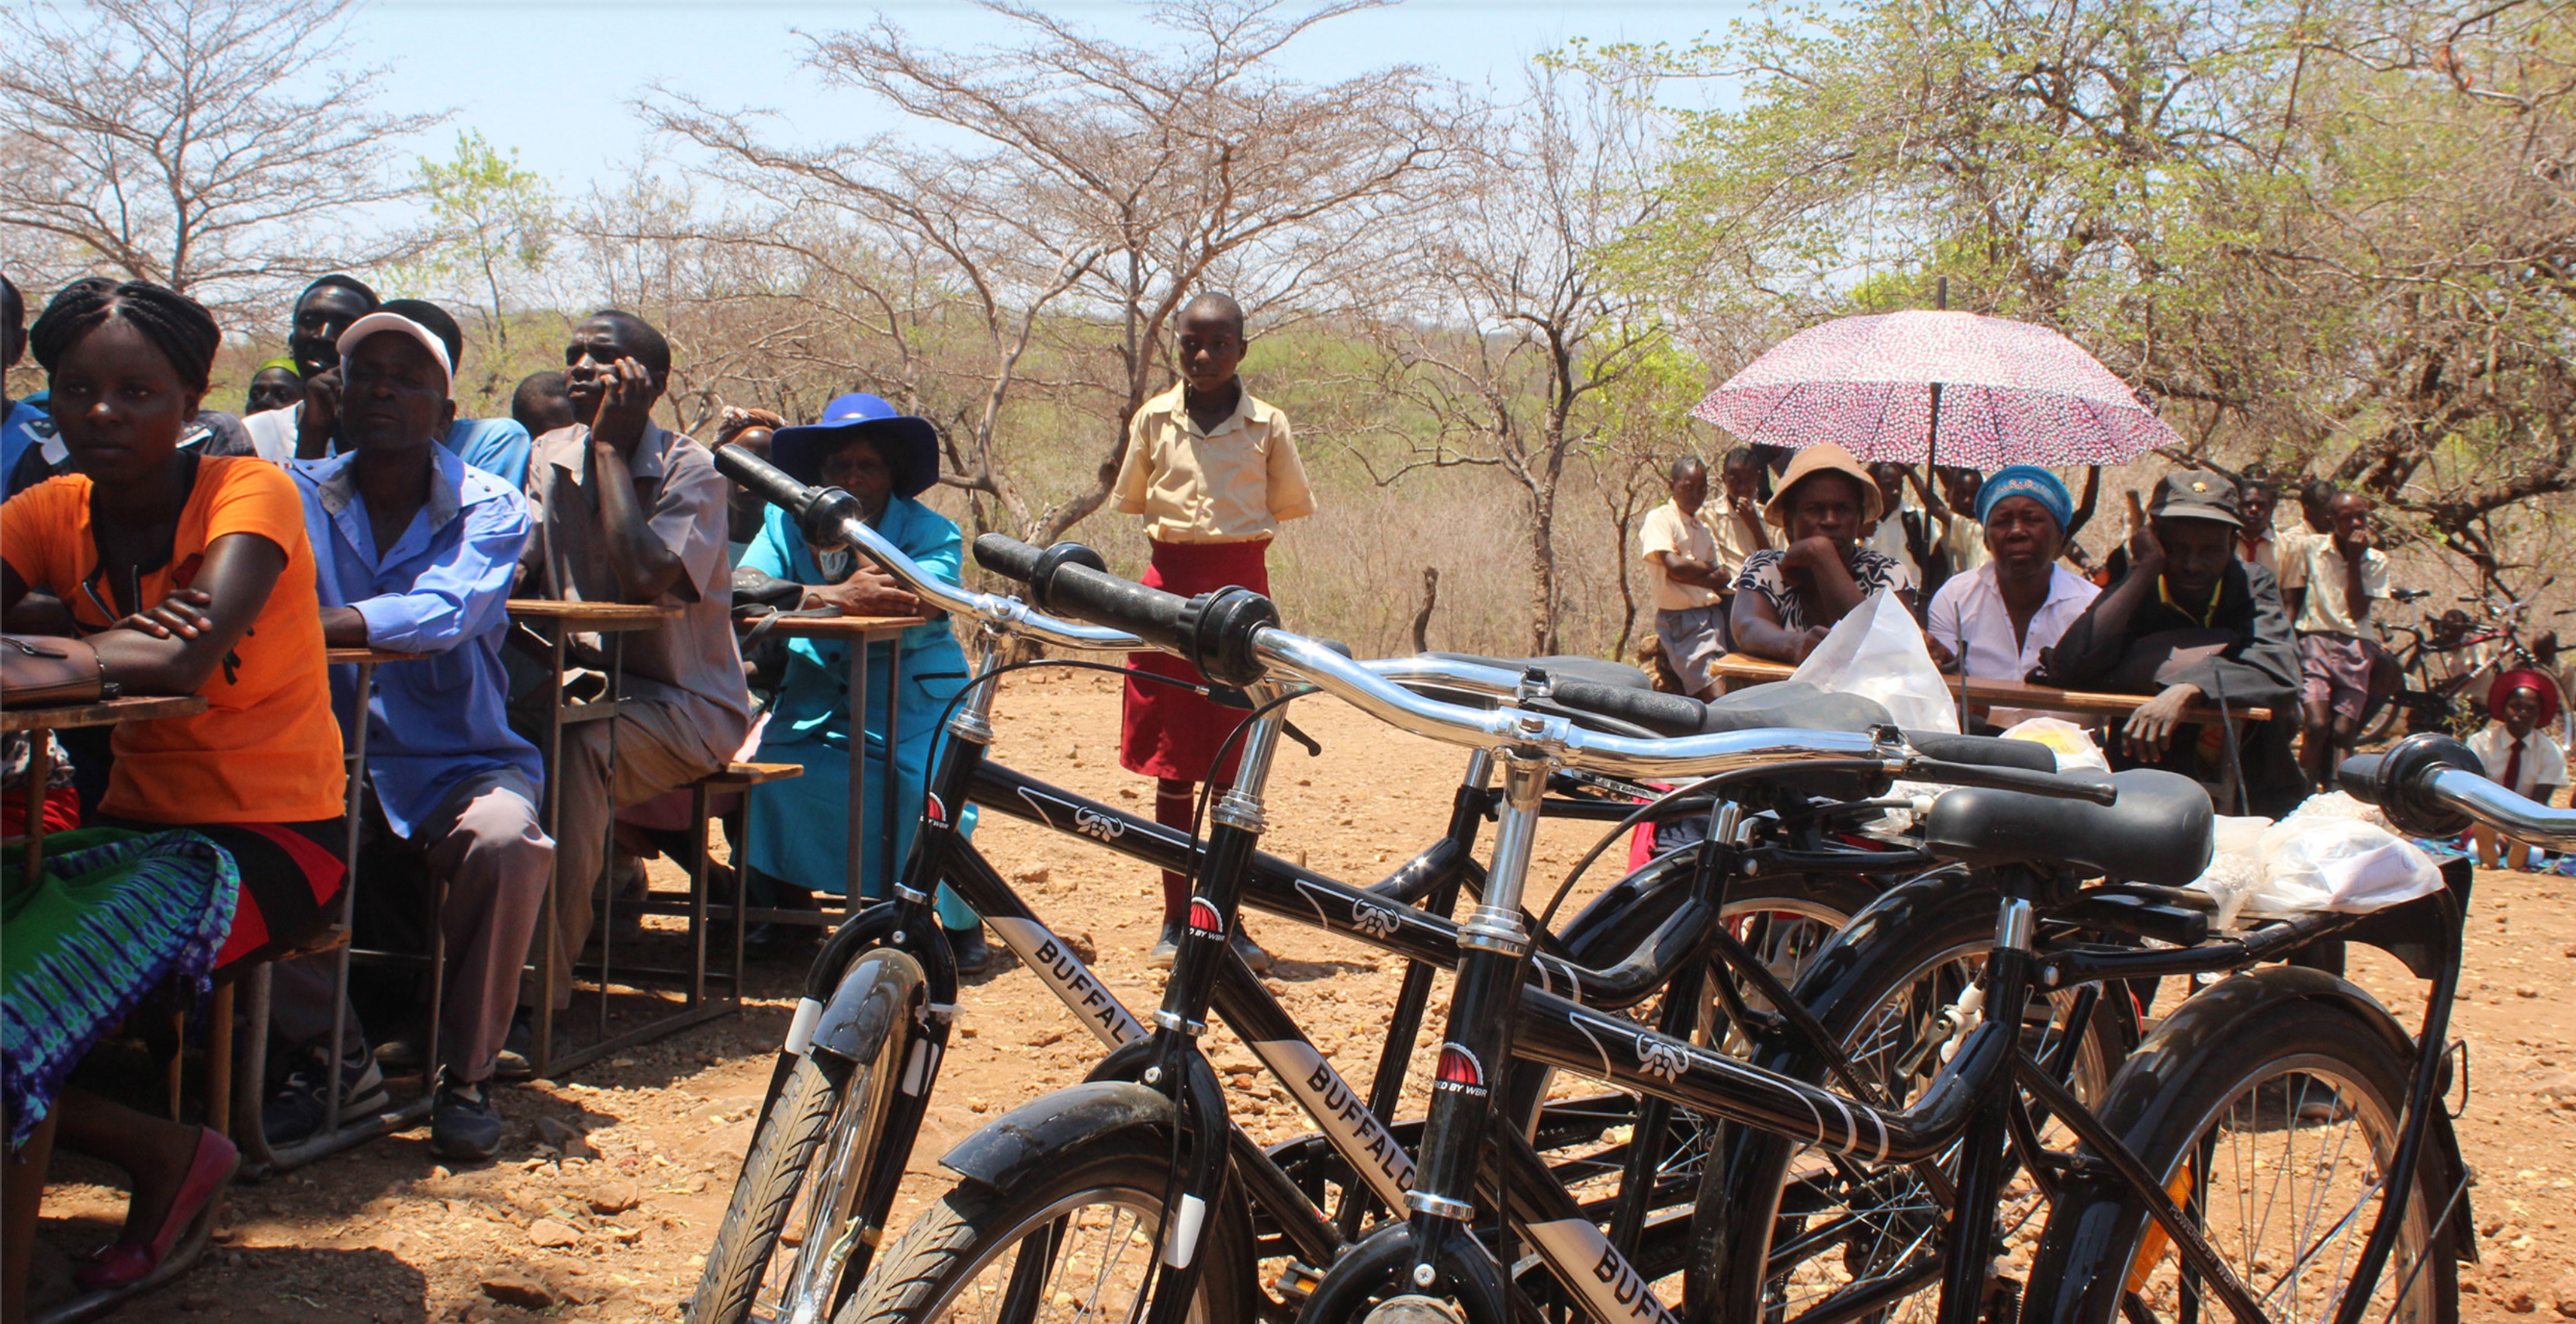 Story Bikes Funds a School in Zimbabwe